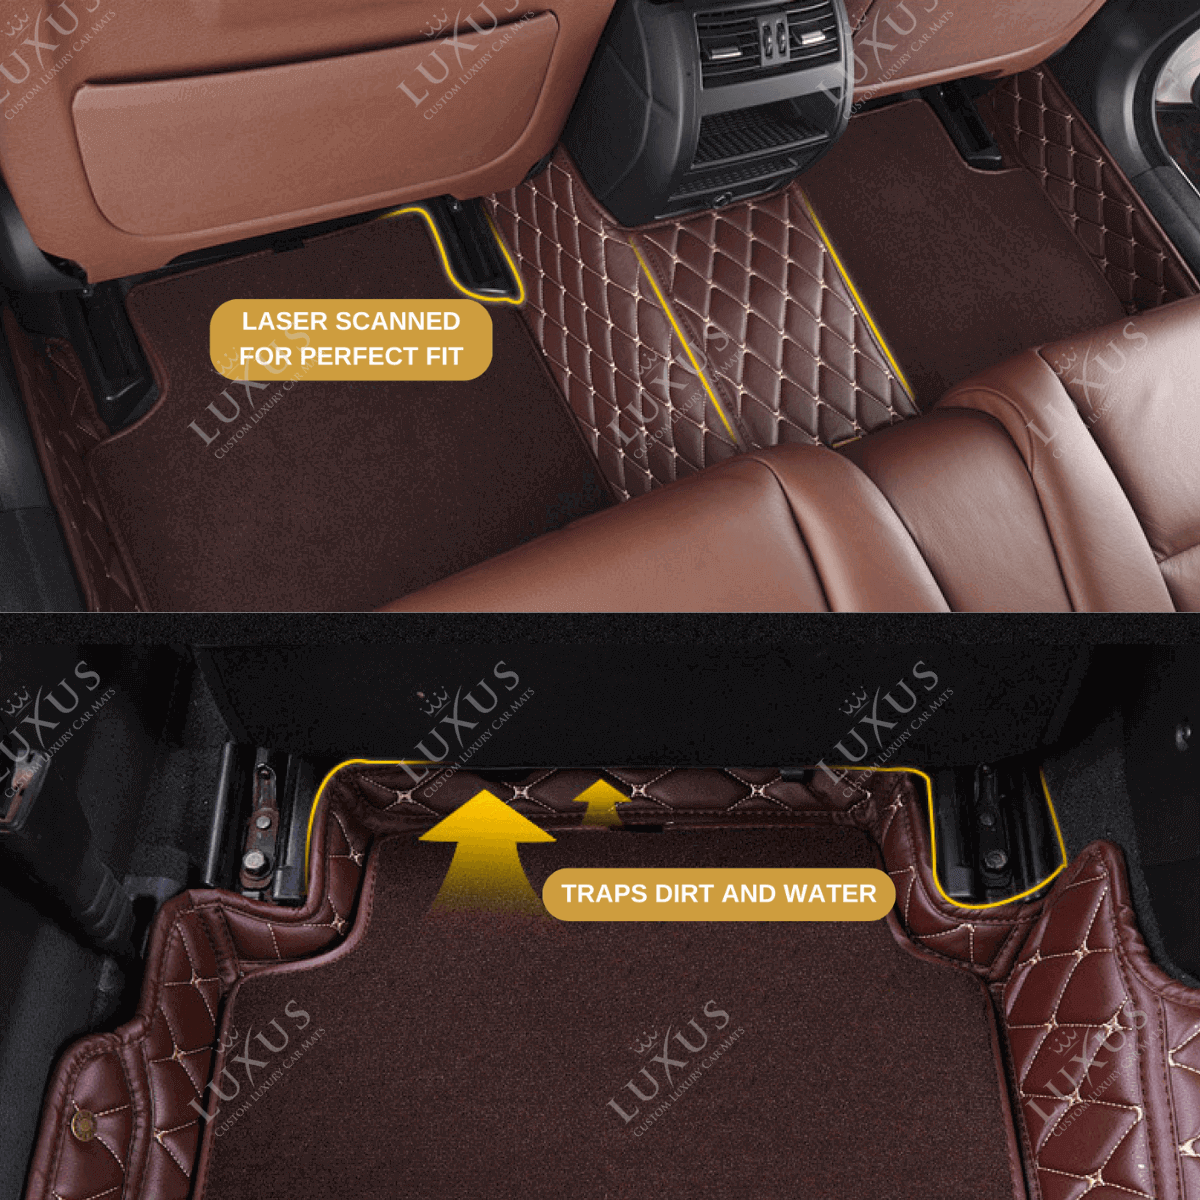 Cream Beige Honeycomb Base & Red Top Carpet Double Layer Luxury Car Mats Set